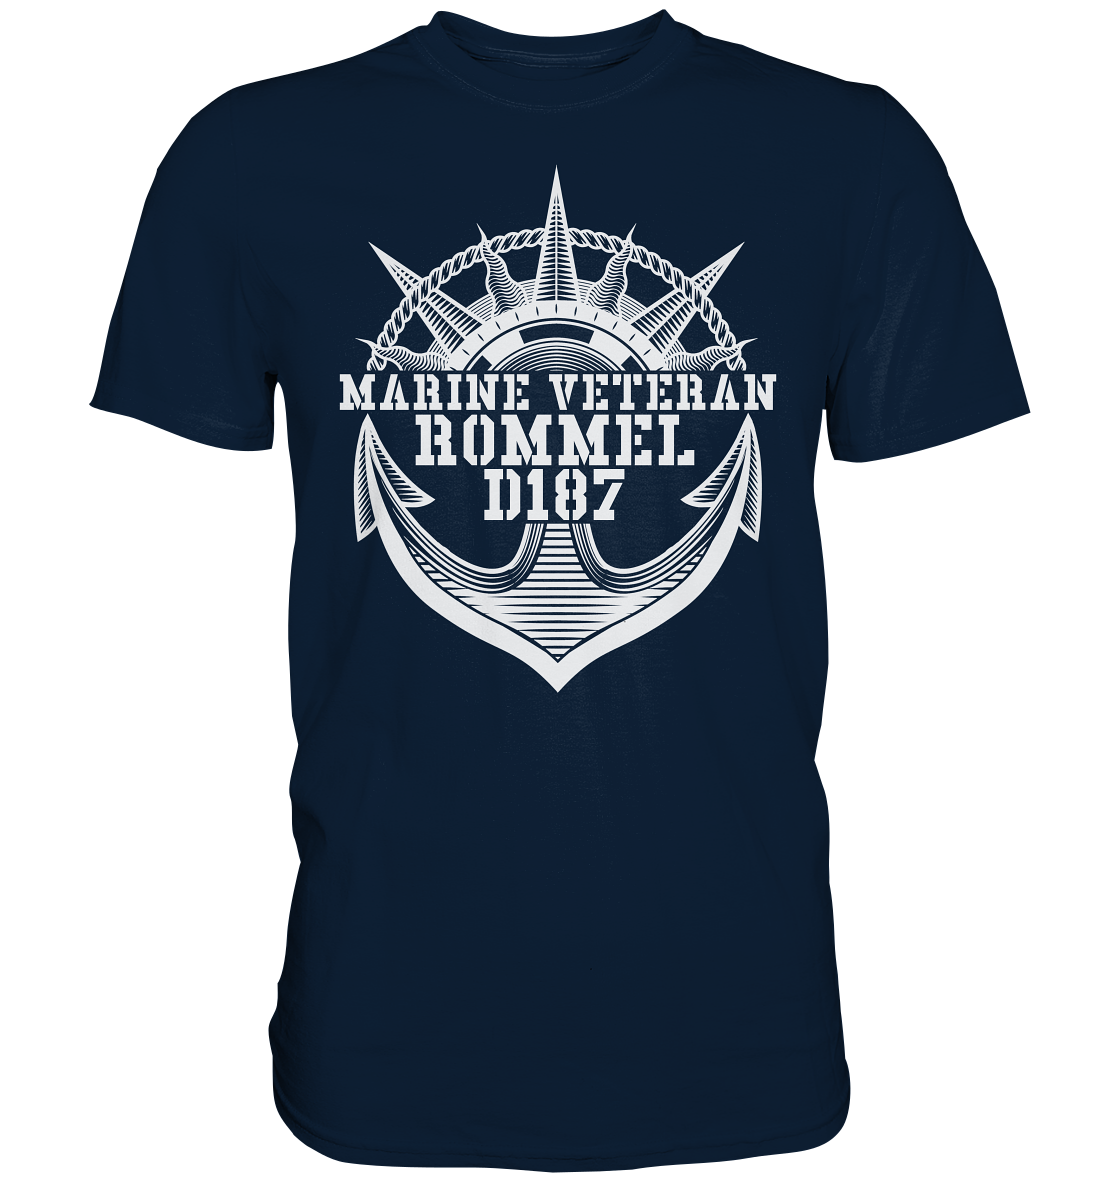 MARINE VETERAN D187 ROMMEL - Premium Shirt